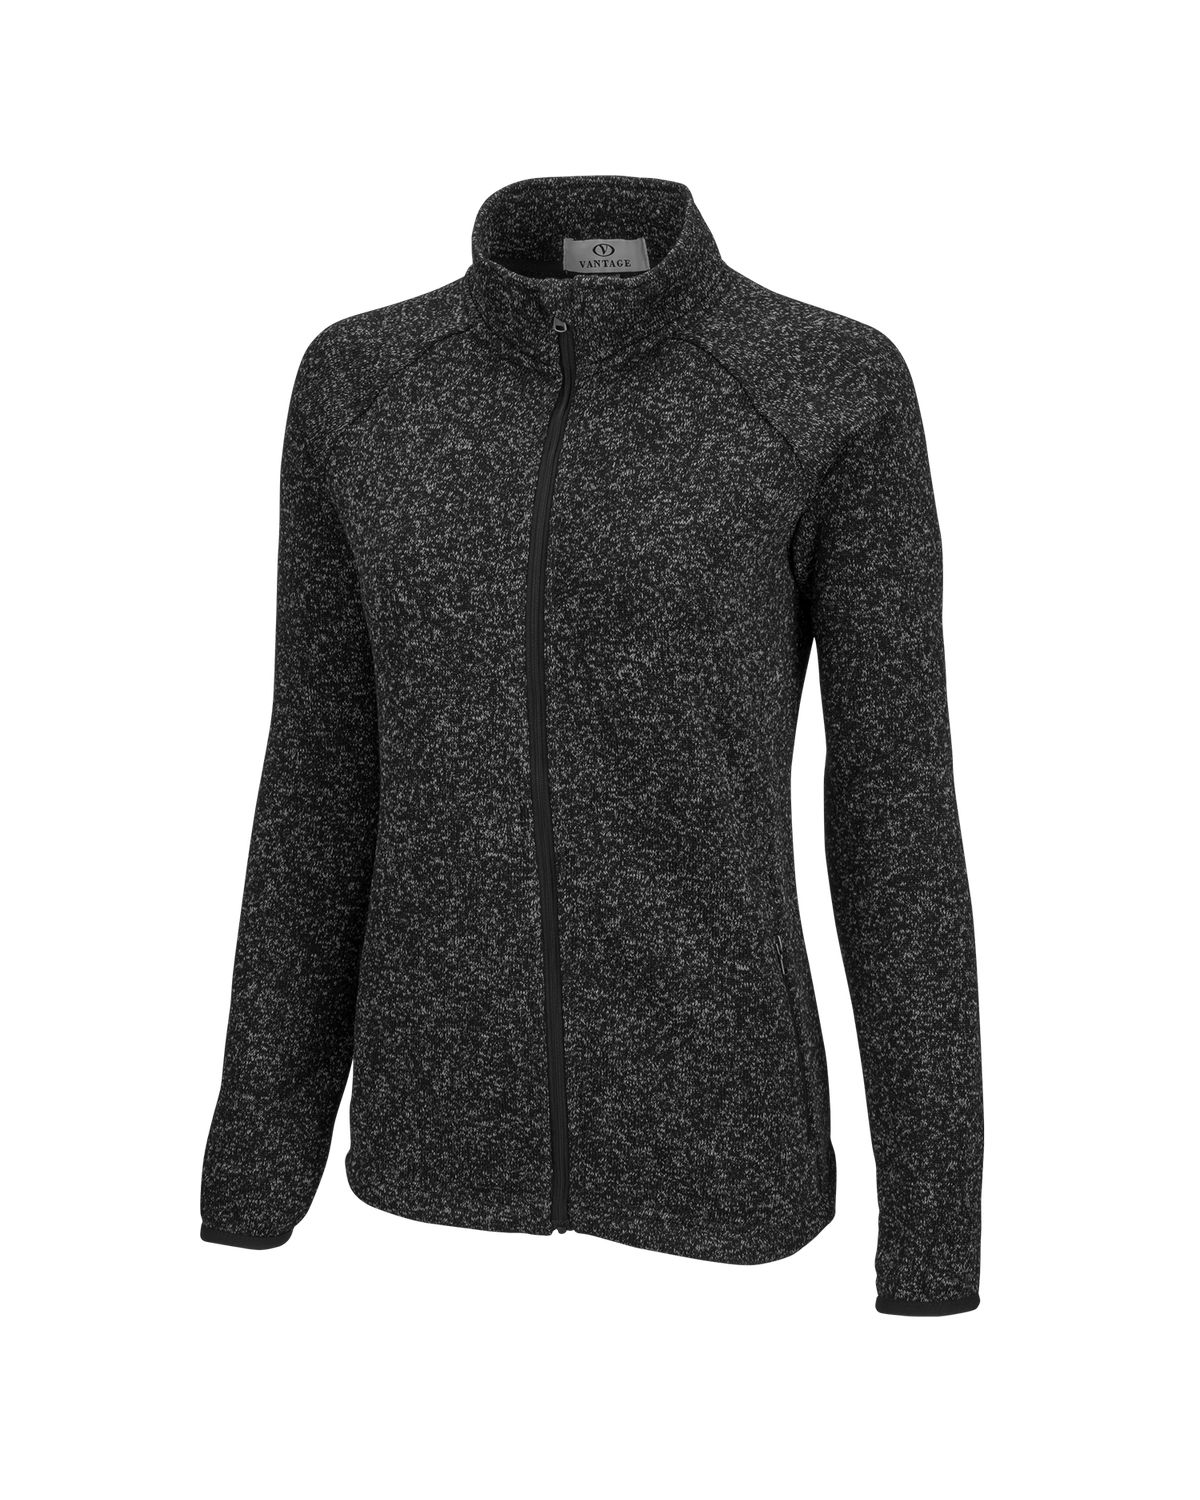 'Vantage 3306 Women's Summit Sweater-Fleece Jacket'